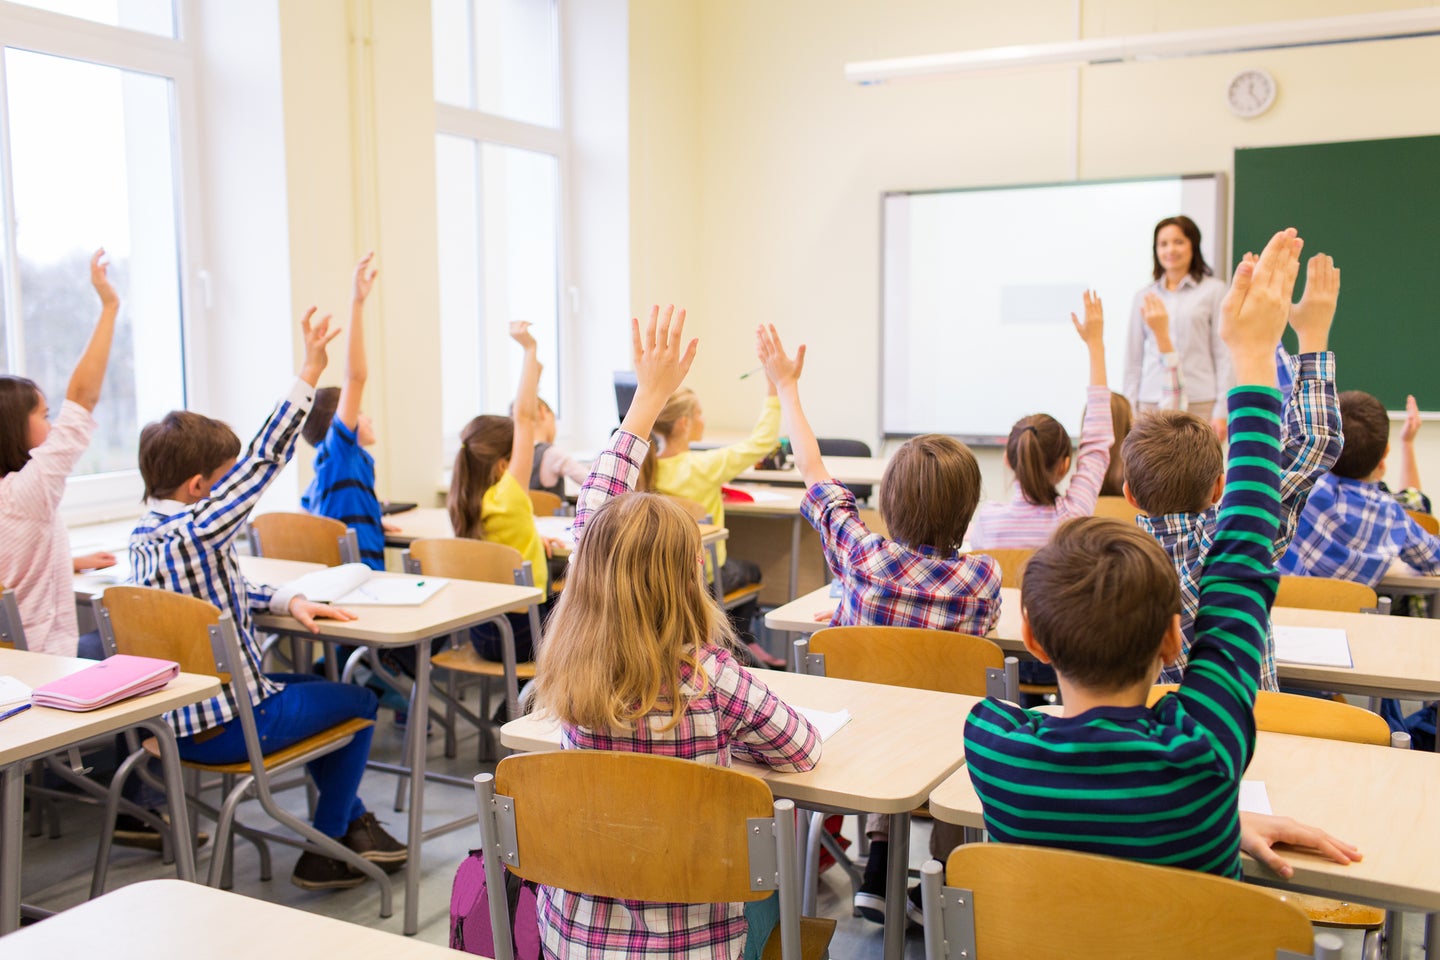 Children raising their hands in a classroom.